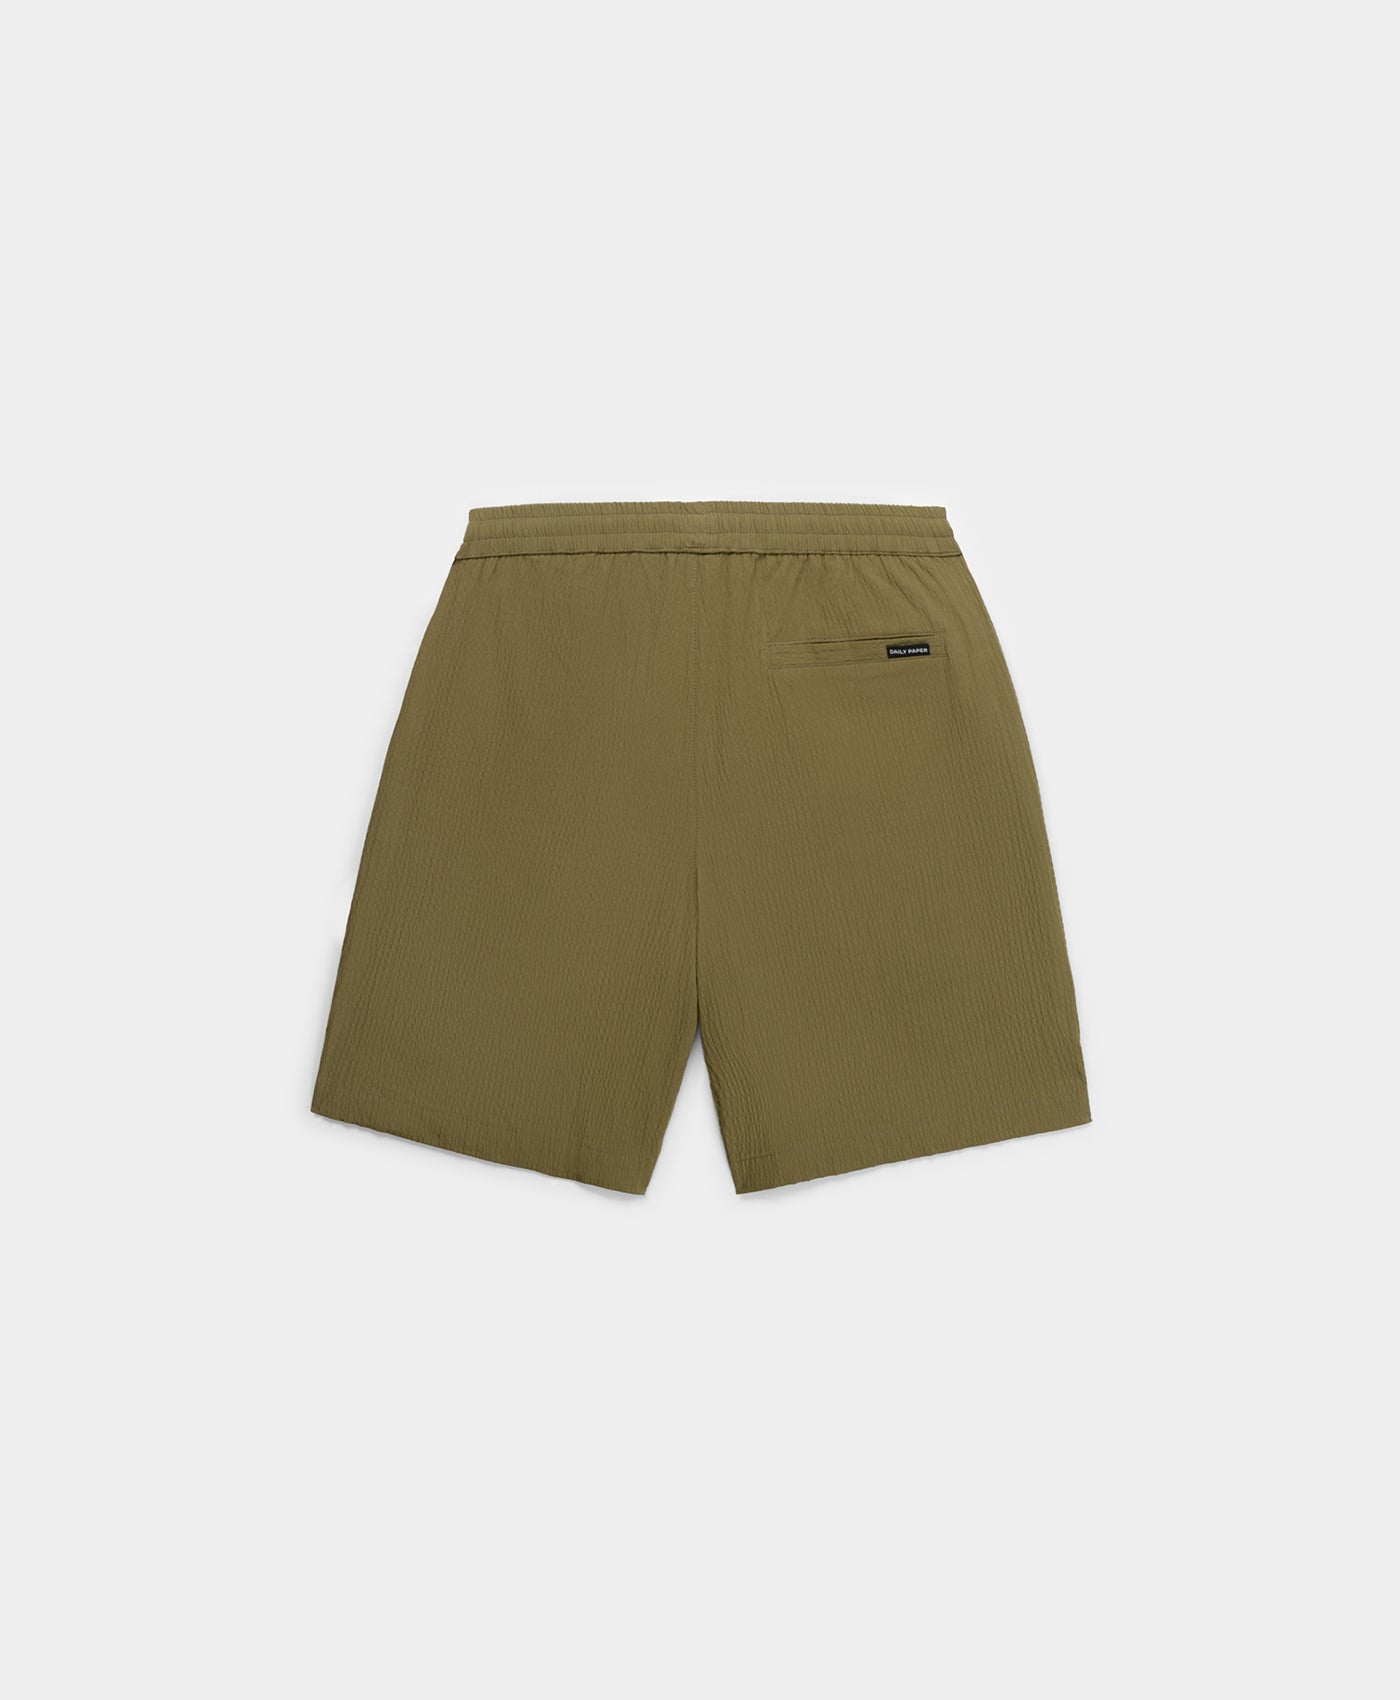 DP - Clover Green Pinira Shorts - Packshot - Rear